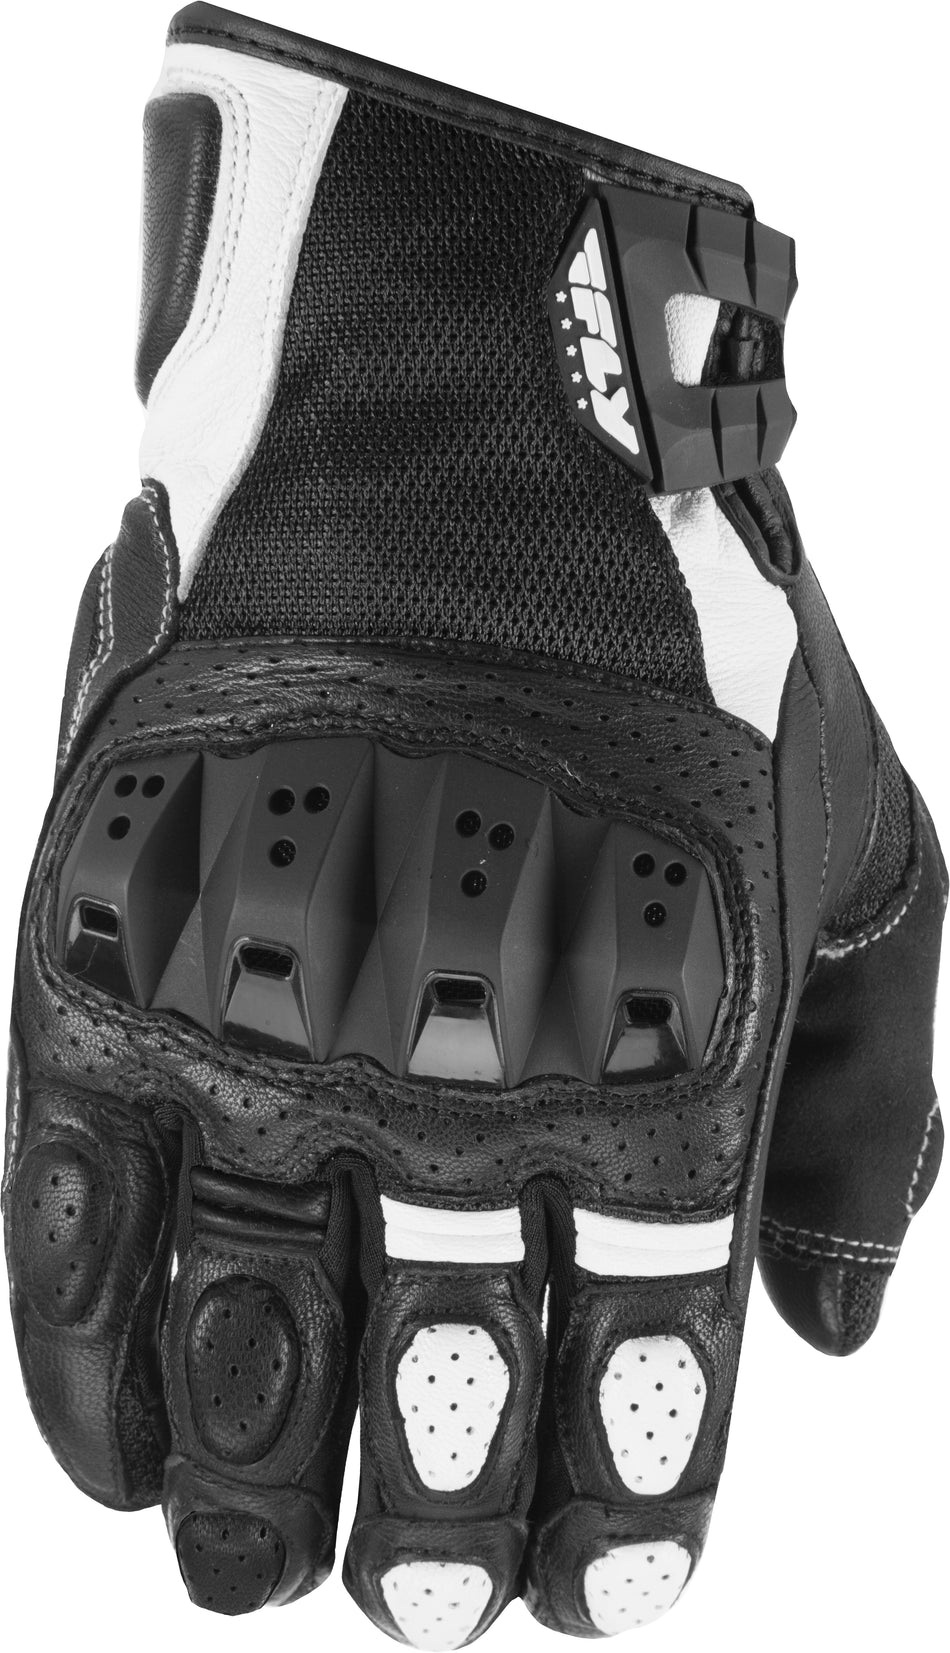 FLY RACING Brawler Gloves Black/White Sm #5884 476-2045~2